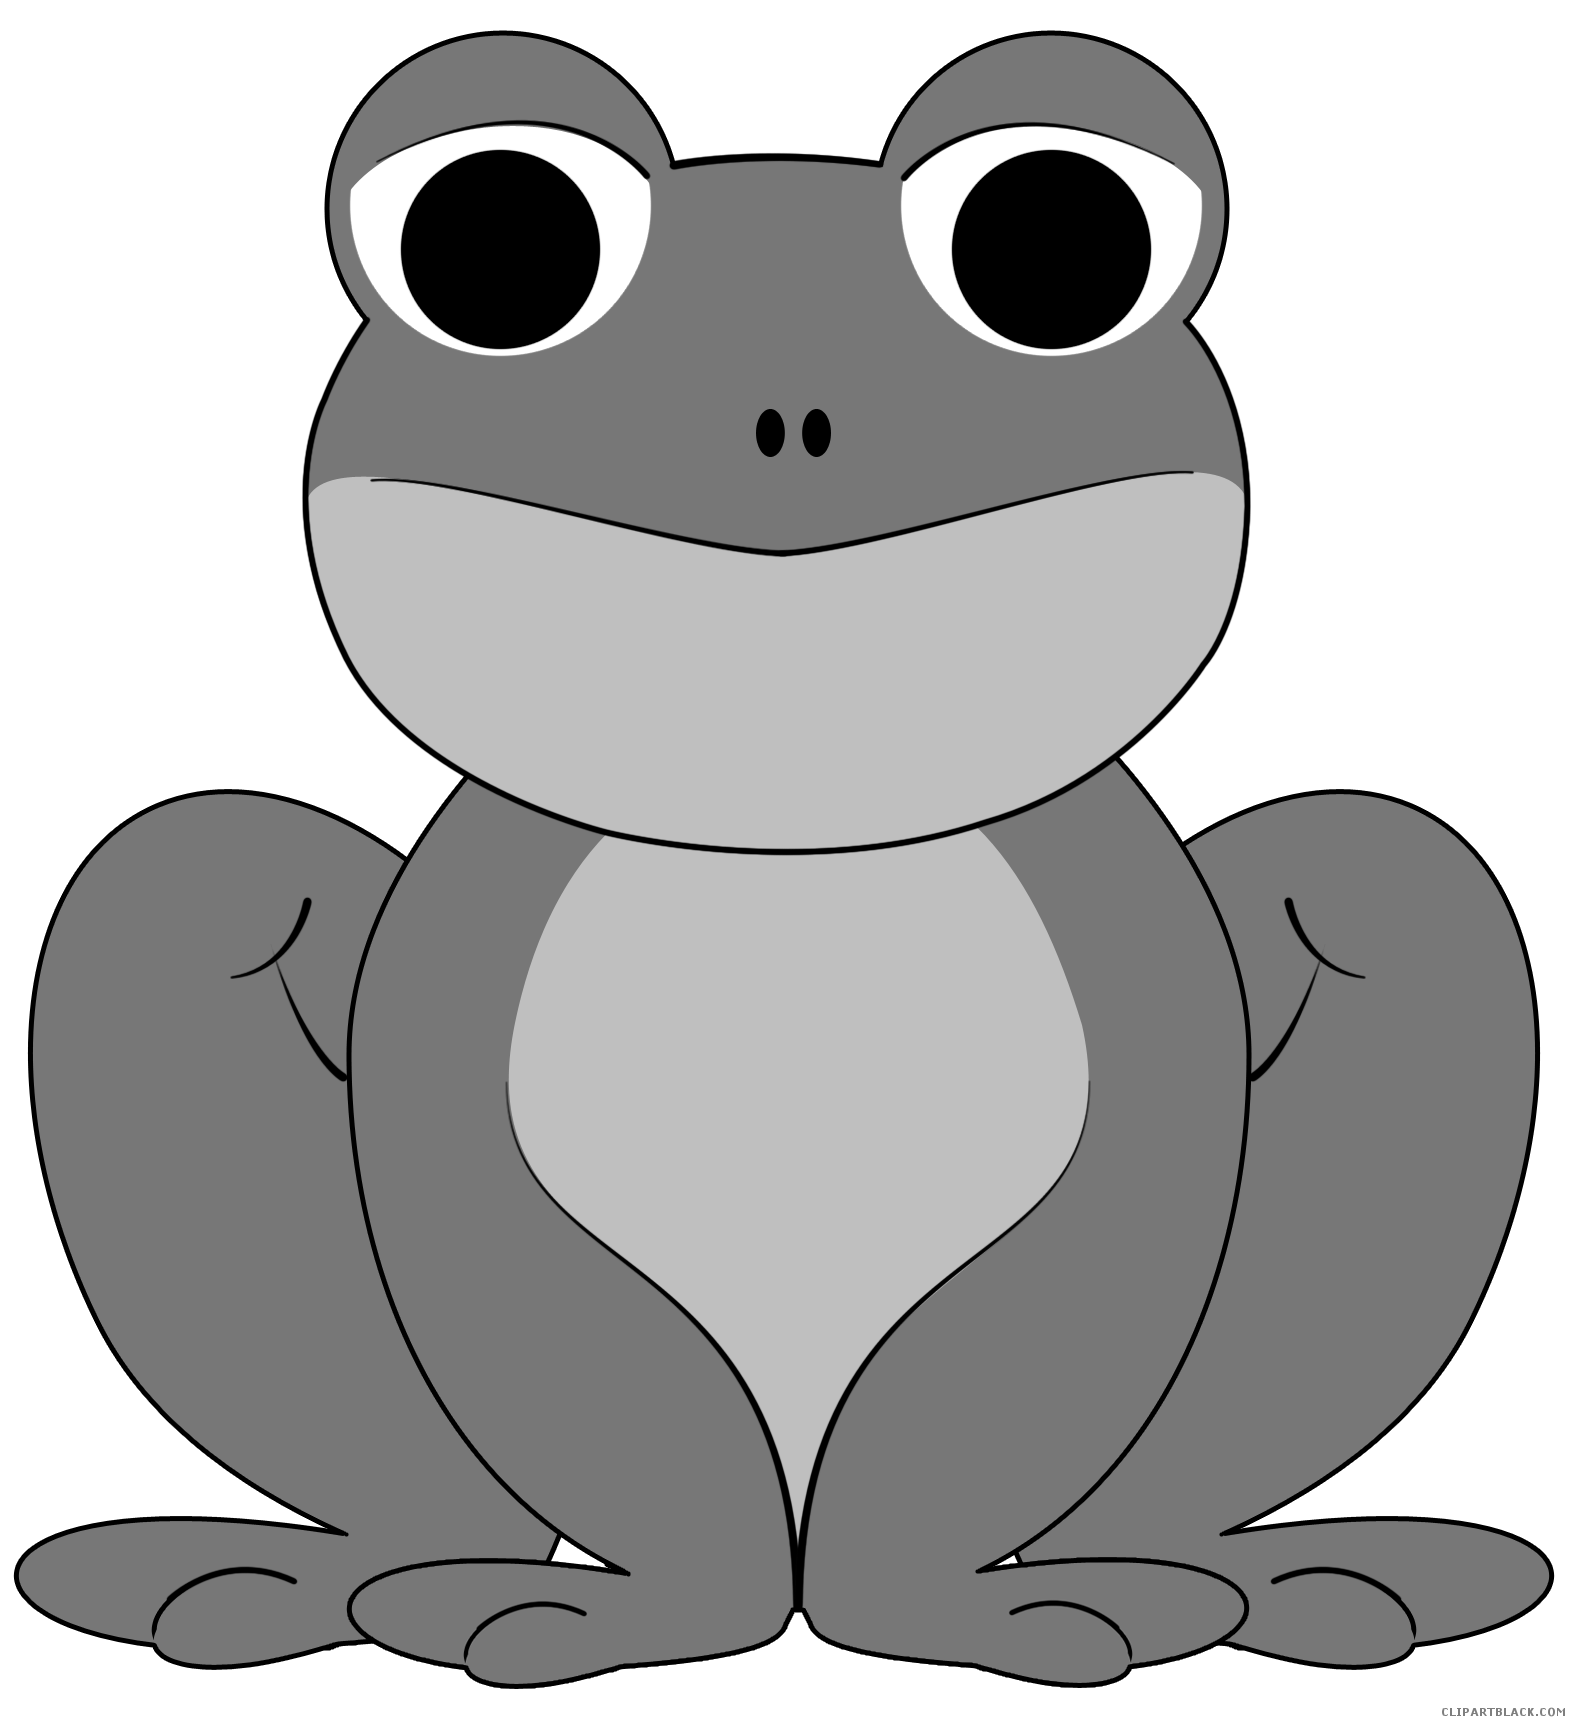 Clipart frog black and white. Cartoon clipartblack com animal